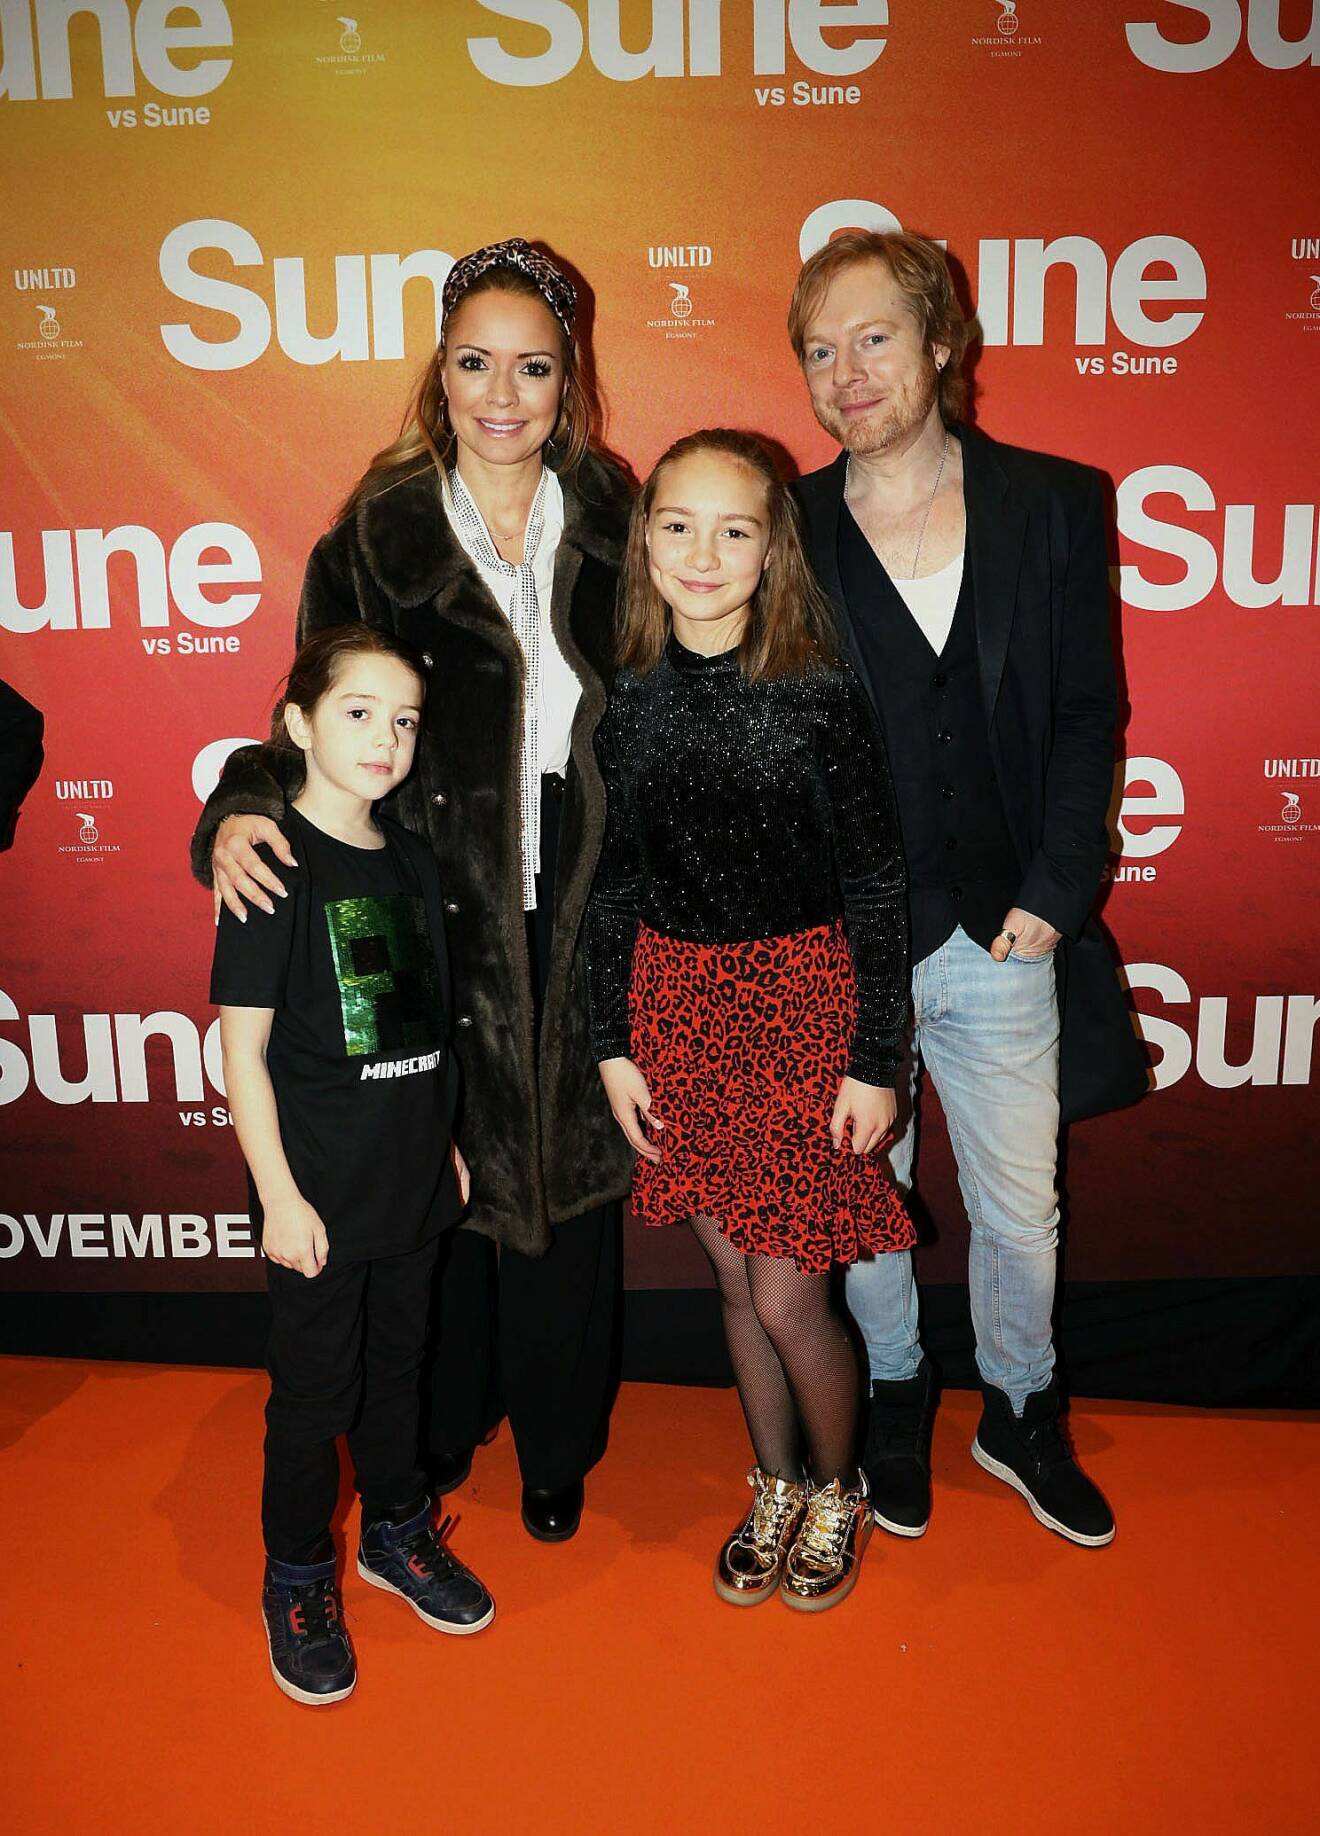 Anna Sahlene med familjen på biopremiären av filmen Sune vs Sune år 2018. Dottern Lily spelar rollen som Sofie, Sunes förälskelse, i filmen.